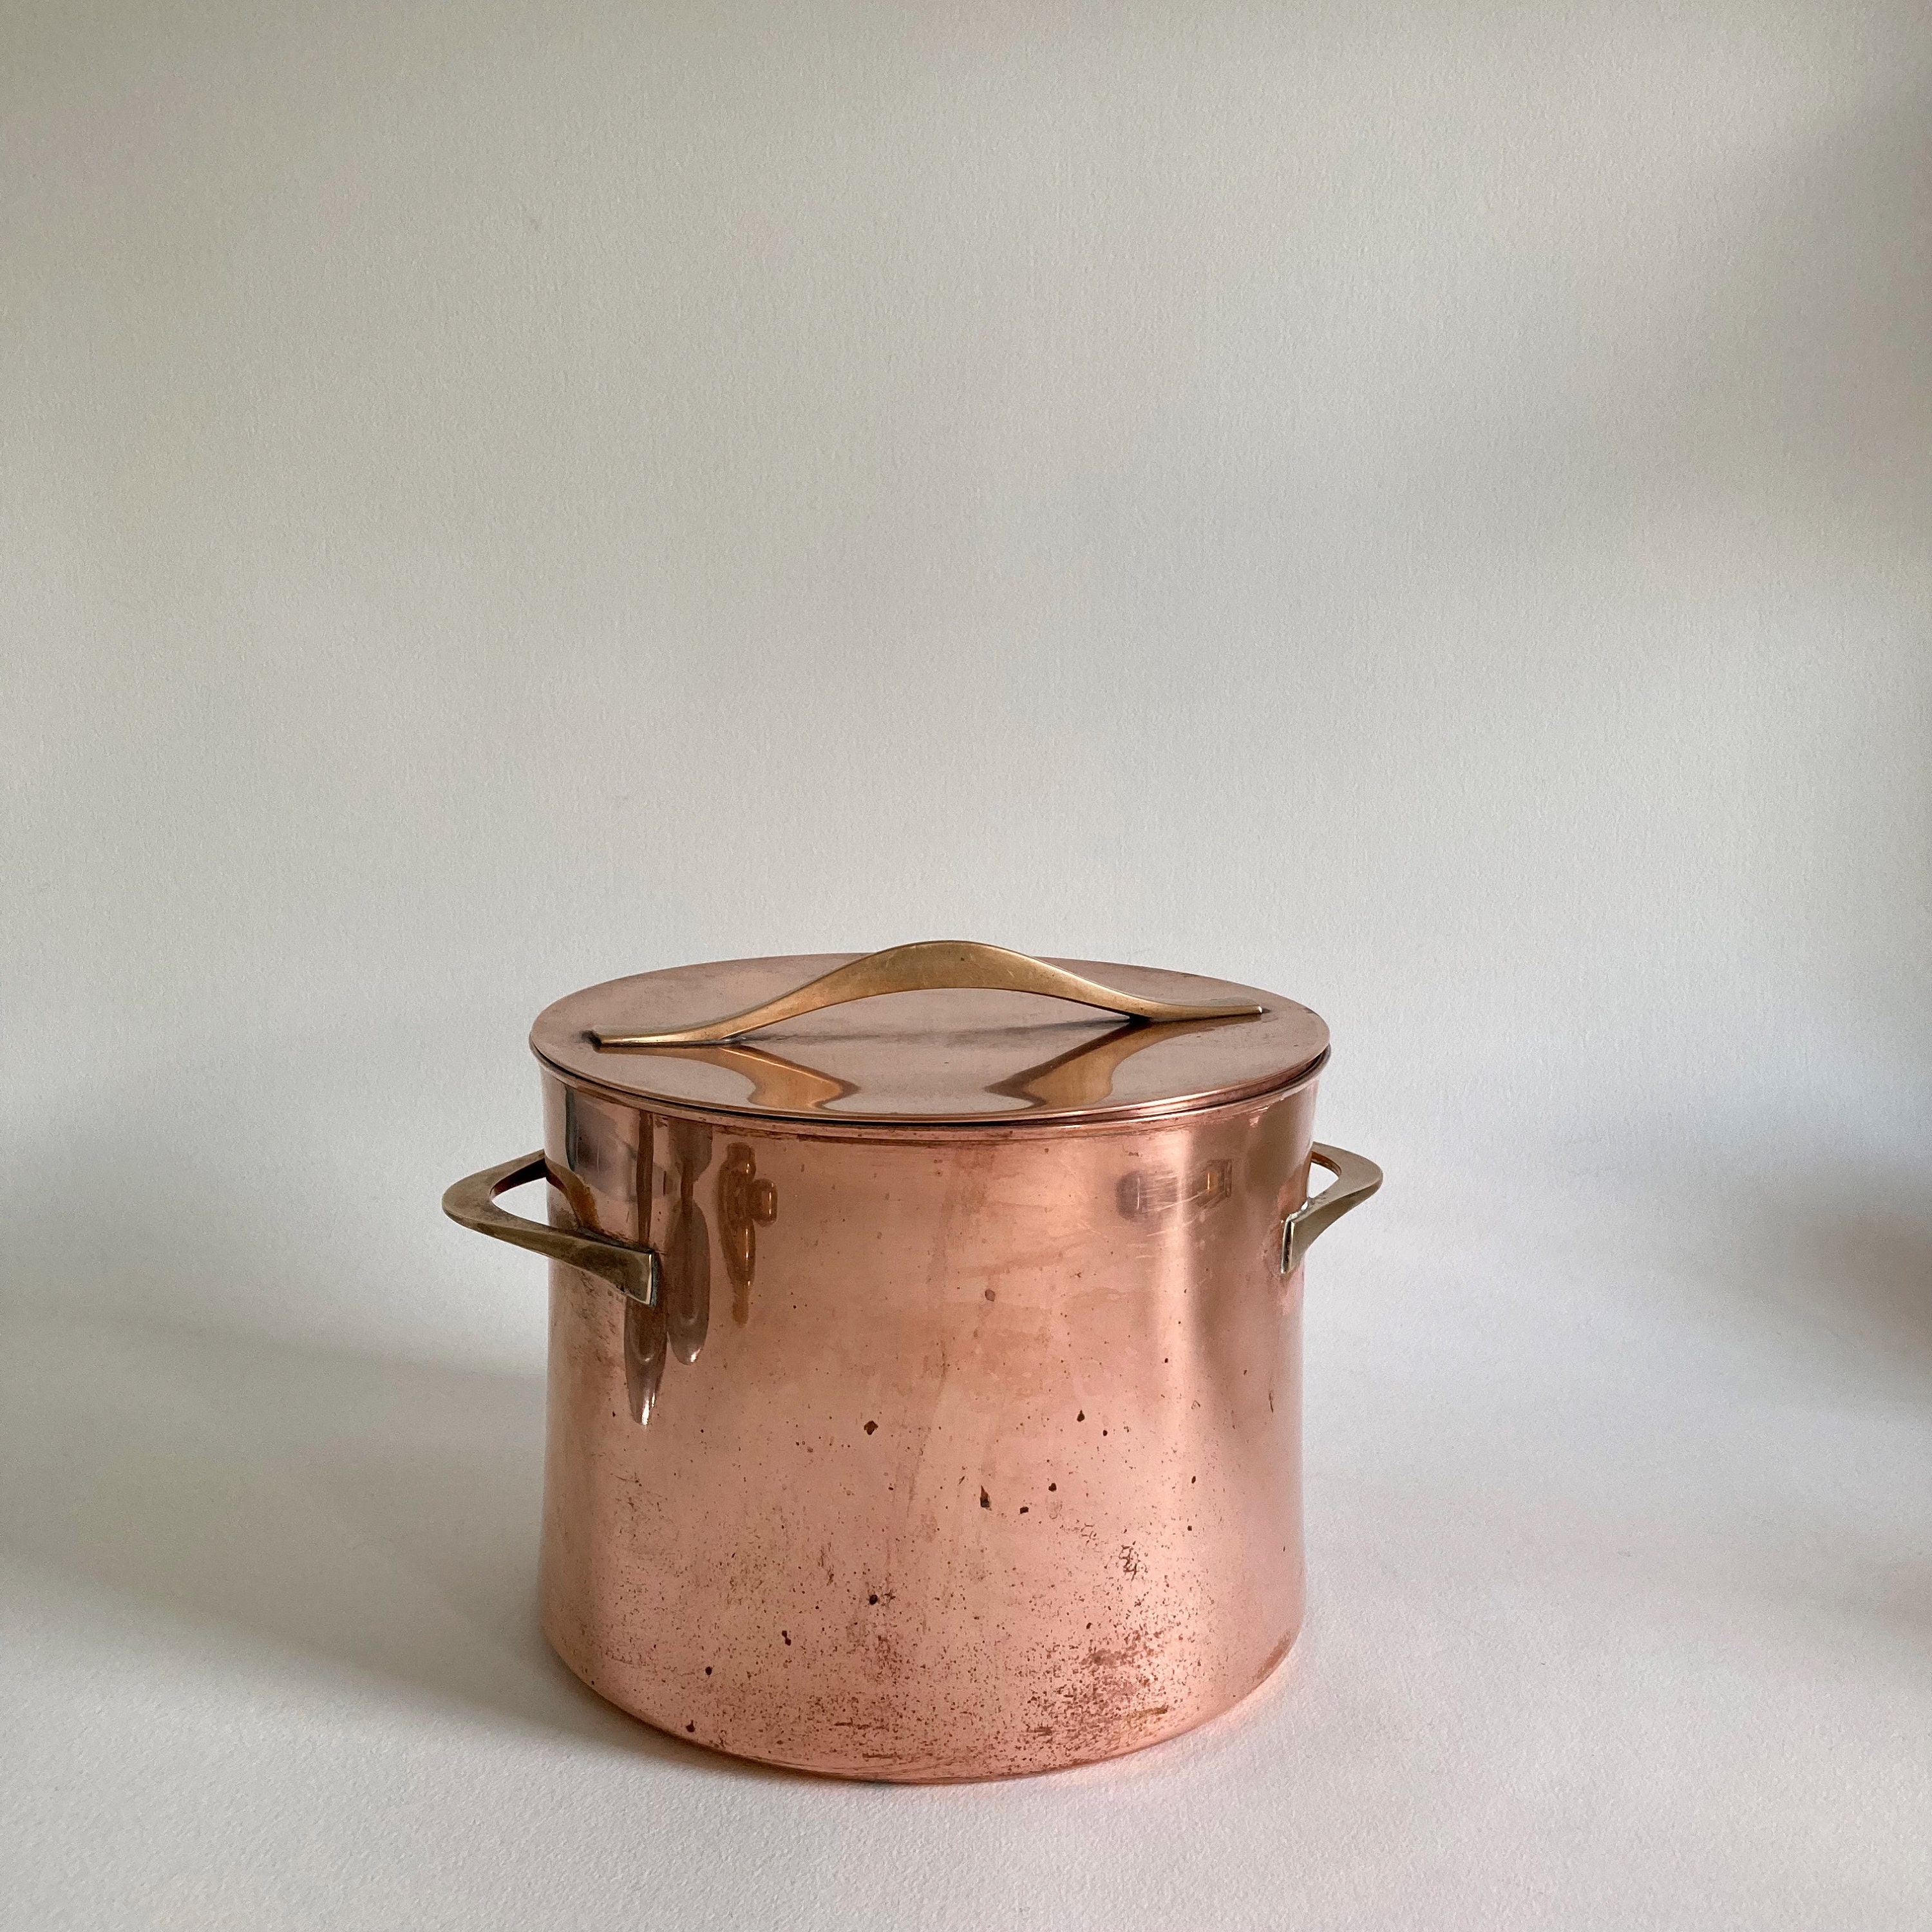 JHQ Copper 7 Qt. Stock Pot with Lid